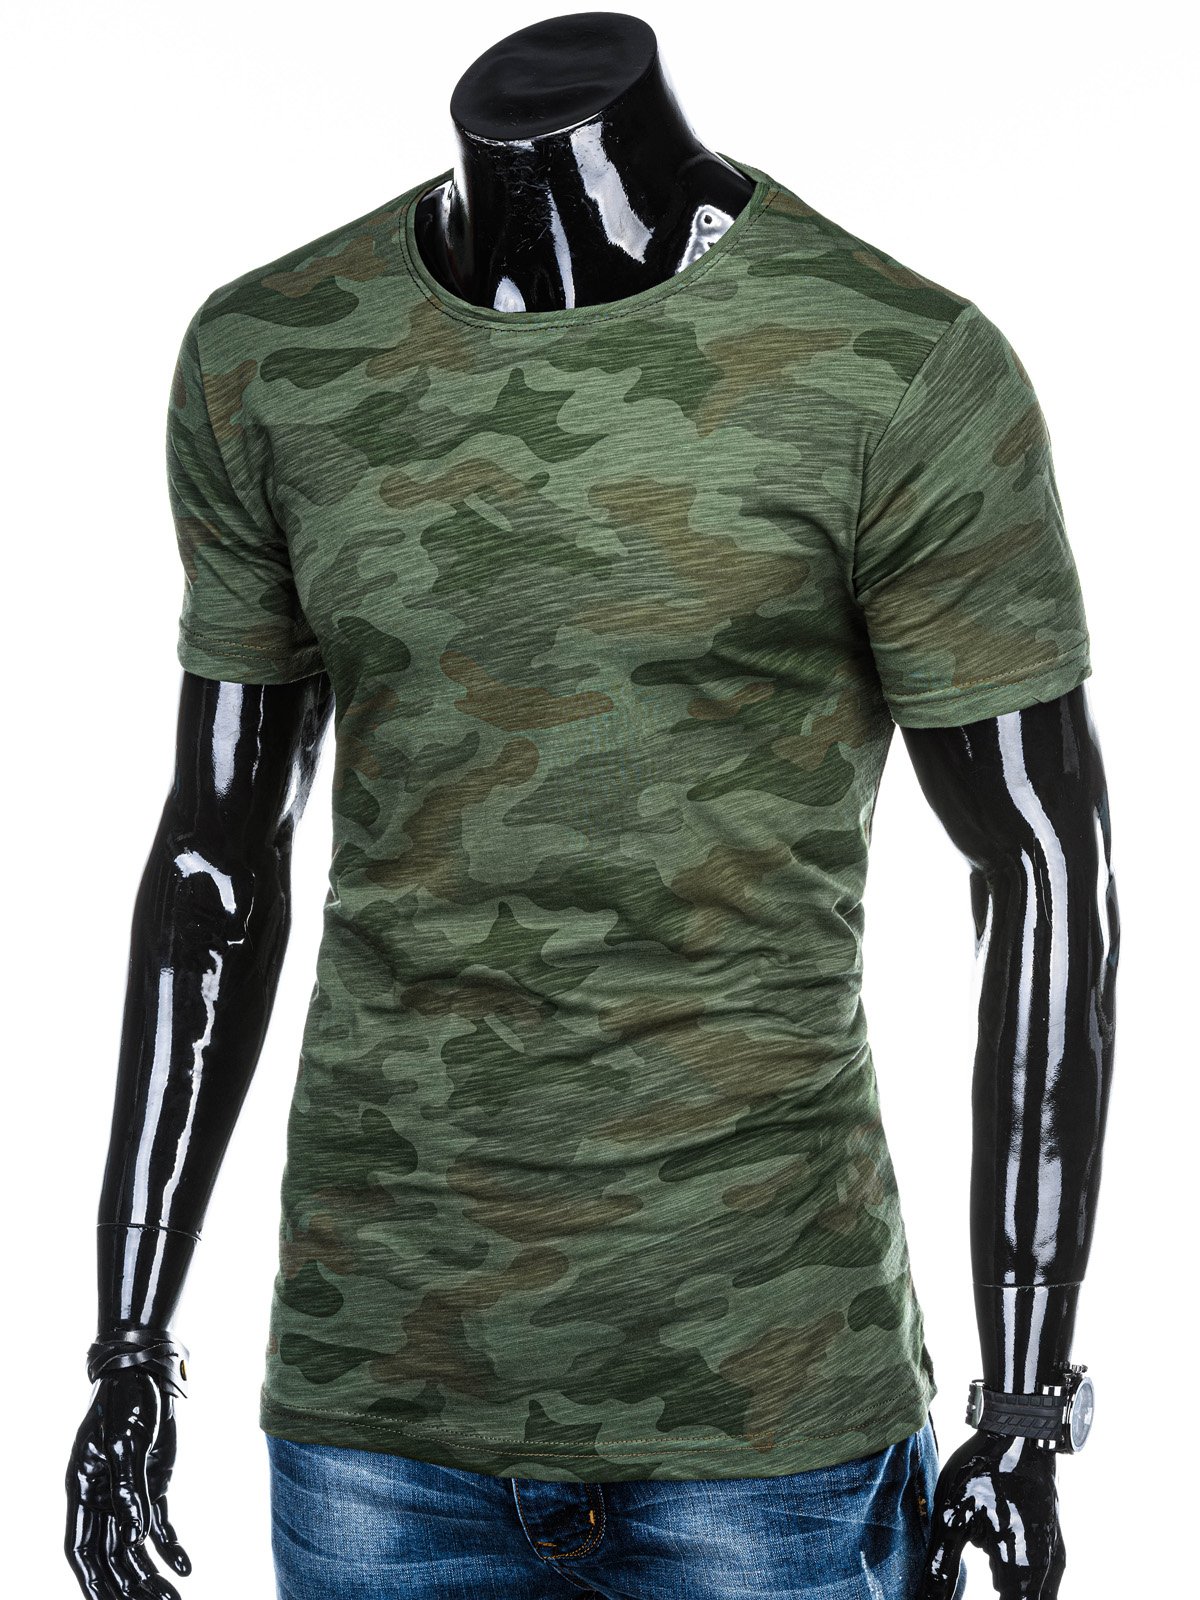 Men's printed t-shirt S1203 - green/camo | MODONE wholesale - Clothing ...